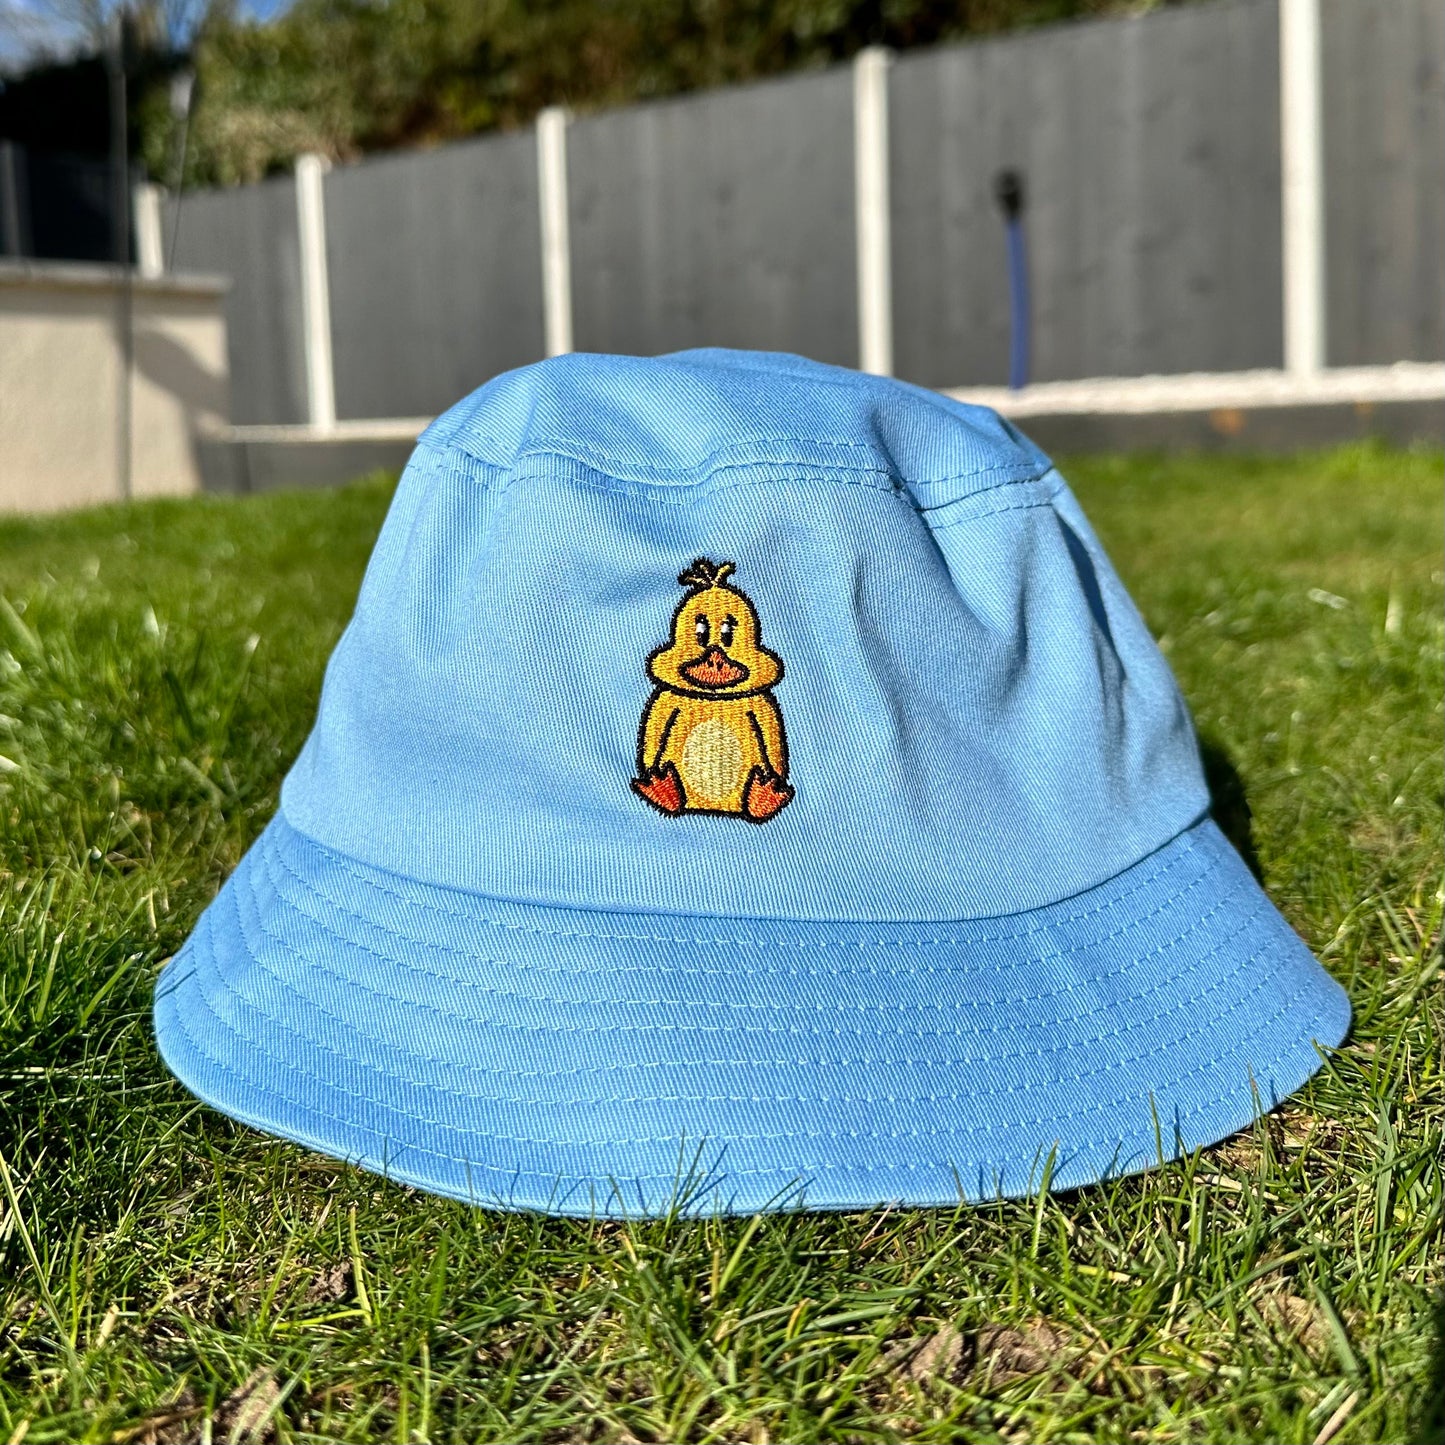 The Duckling Duckett's Bucket Hat - Blue